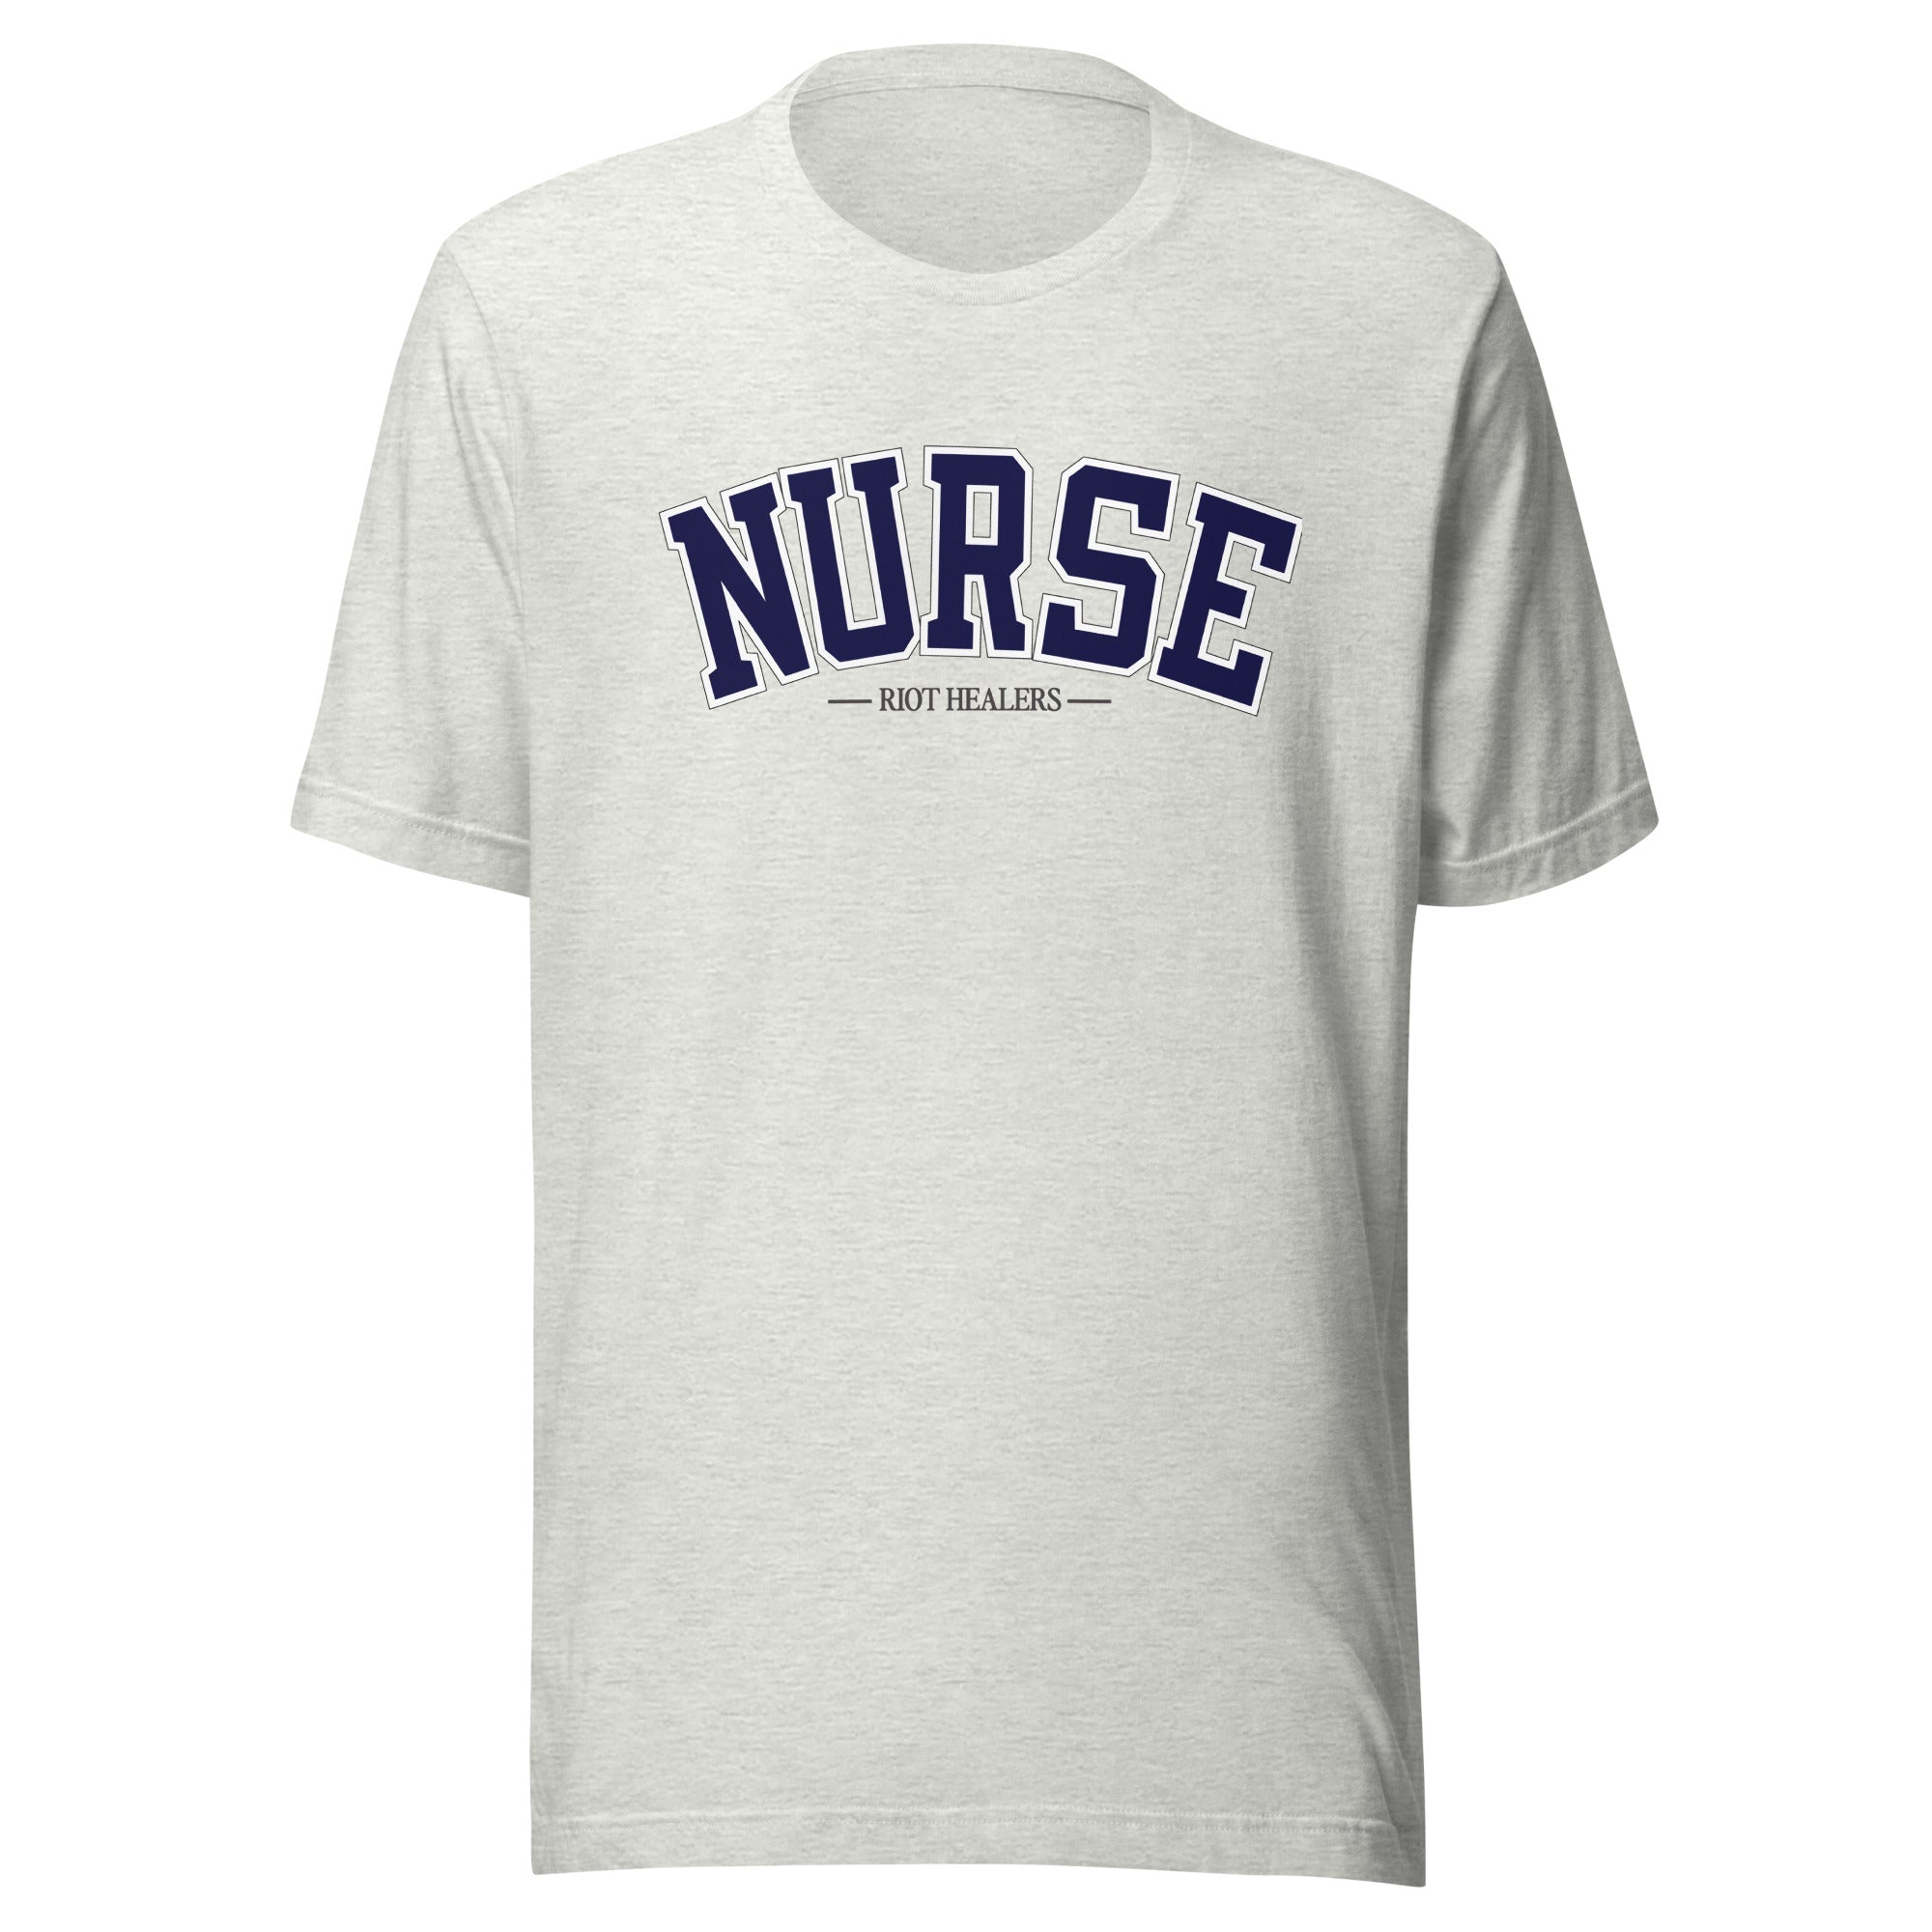 Nurse Collegiate Tee - Grey and Navy